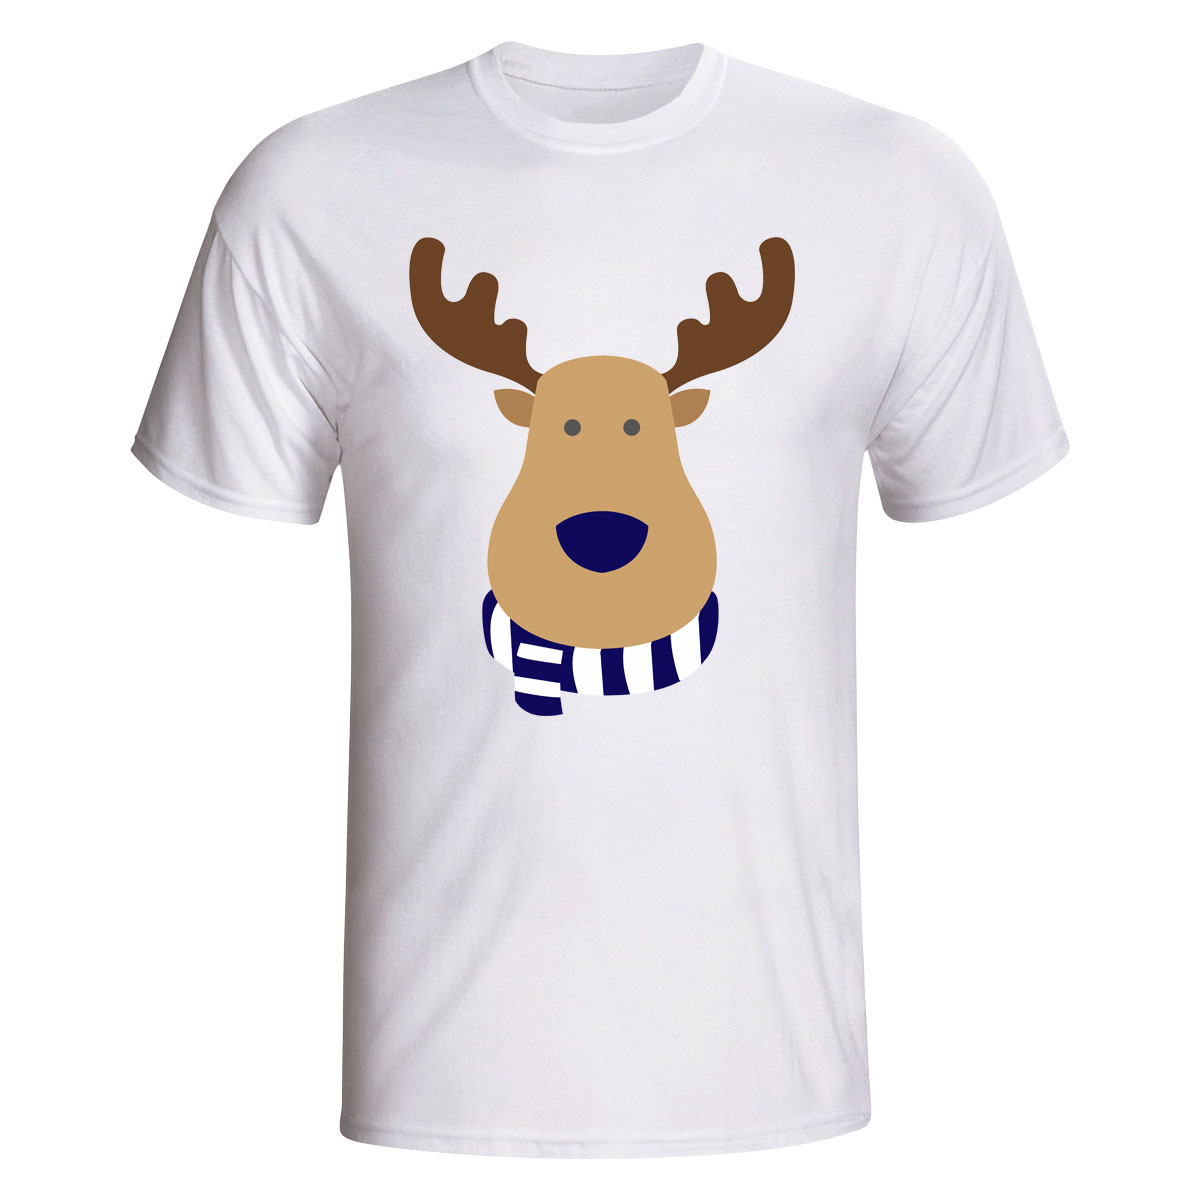 La Galaxy Rudolph Supporters T-shirt (white) - Kids